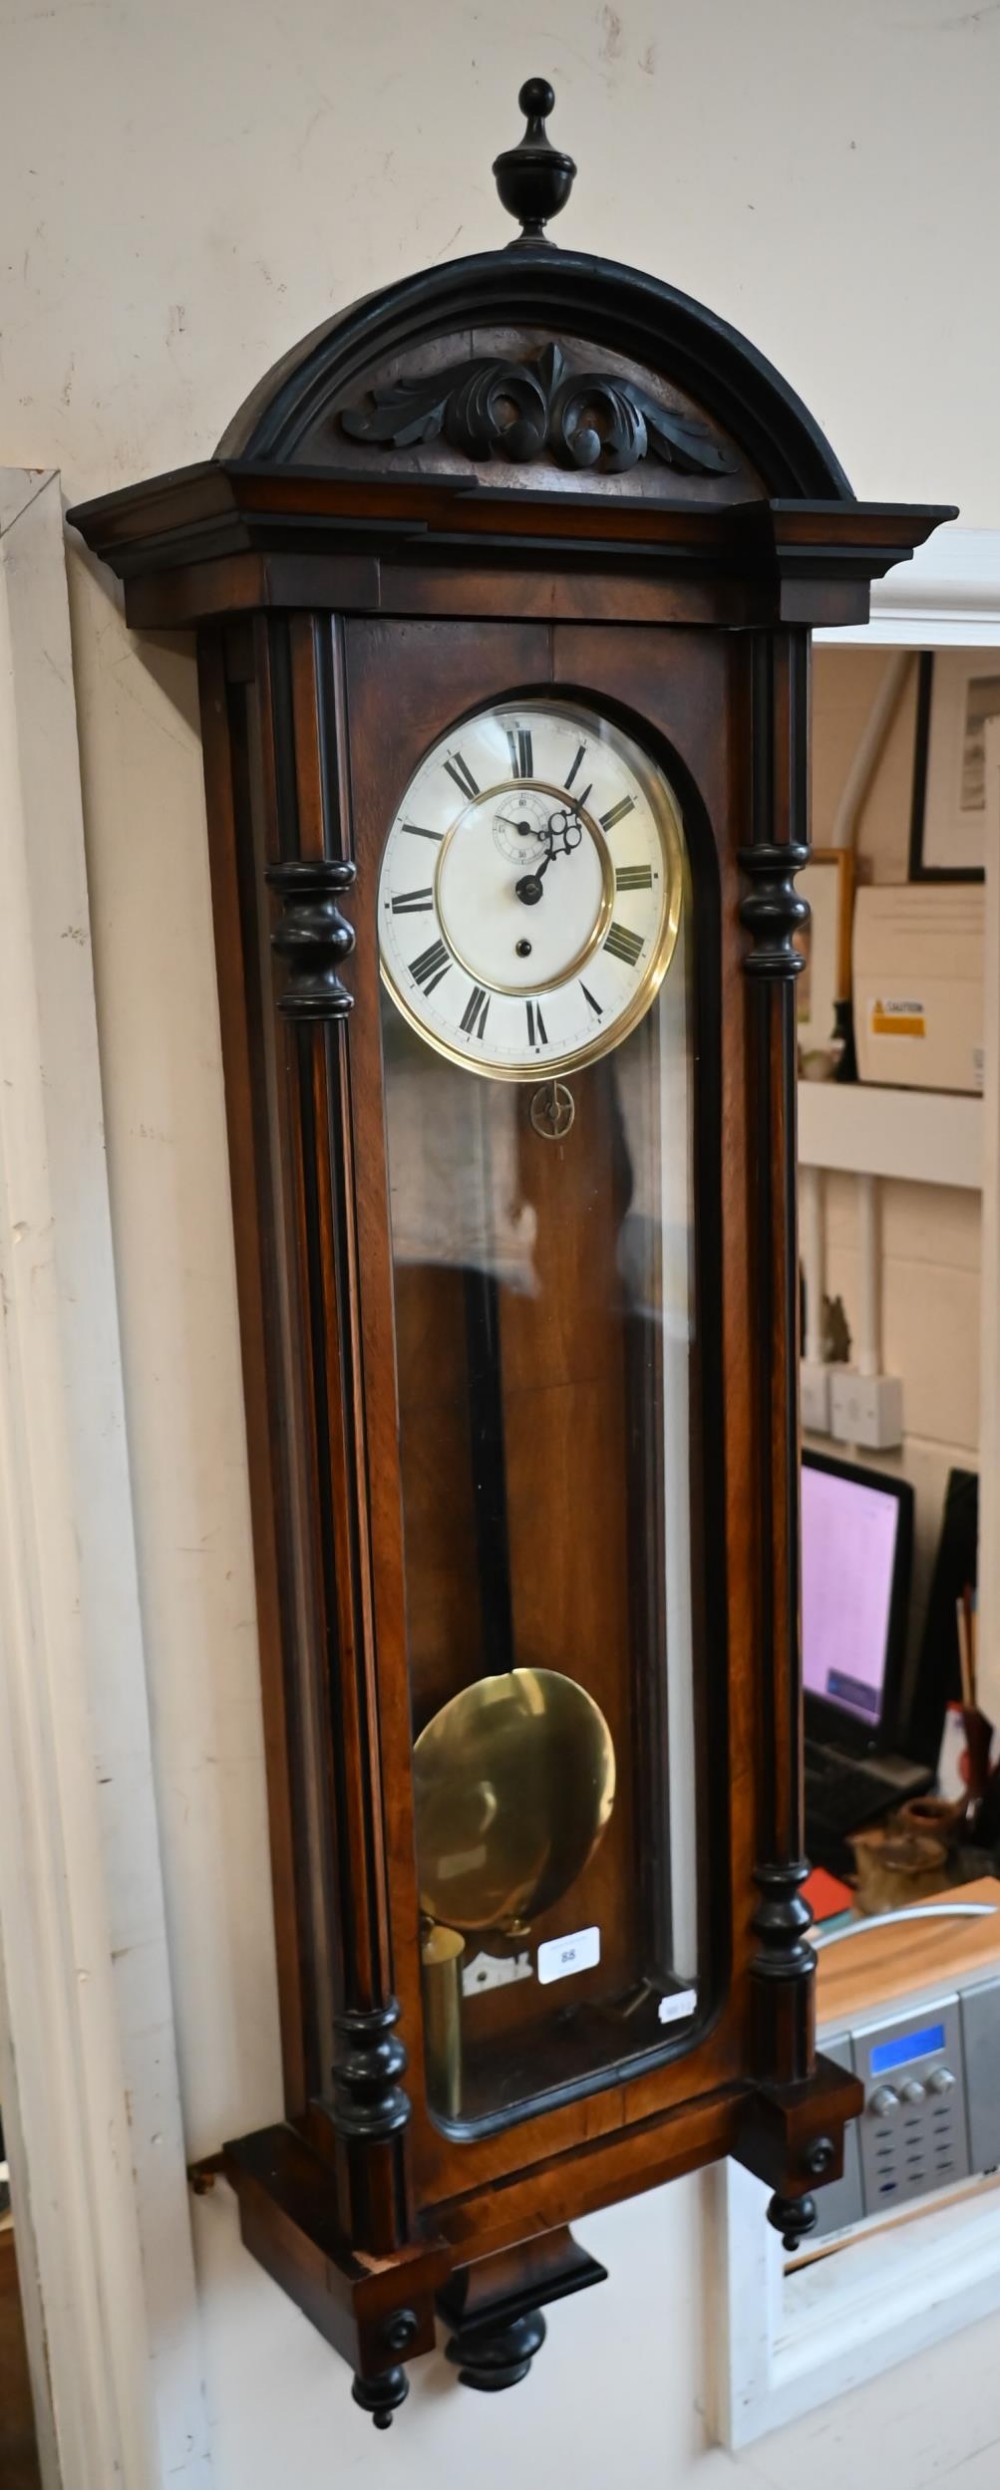 Vienna style walnut and ebonised wall clock c/w pendulum and key a/f, 120 cm high - Image 2 of 2